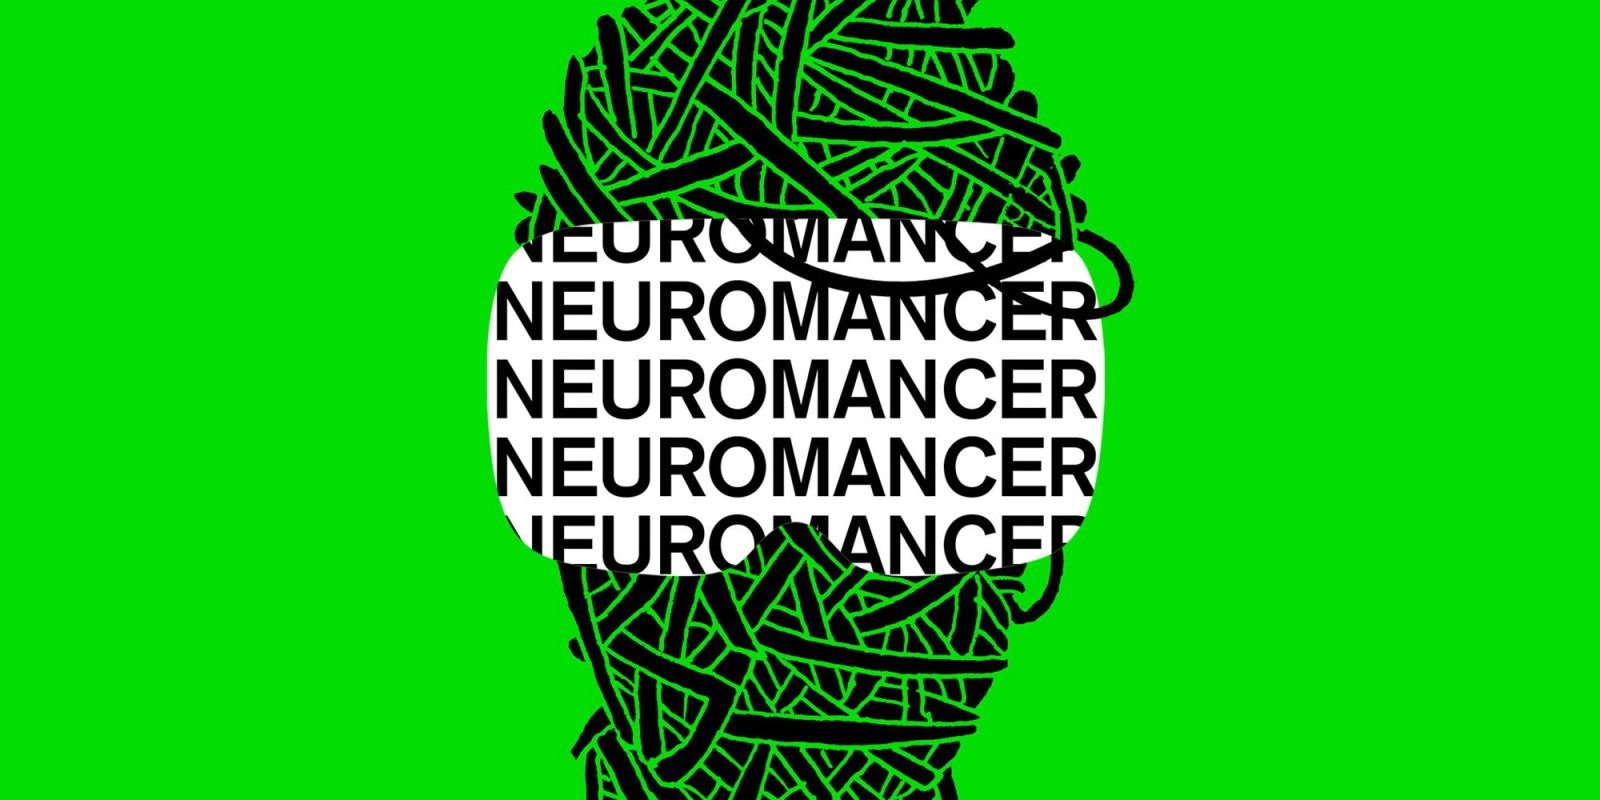 Apple TV+ announces new series based on William Gibson's sci-fi novel 'Neuromancer'